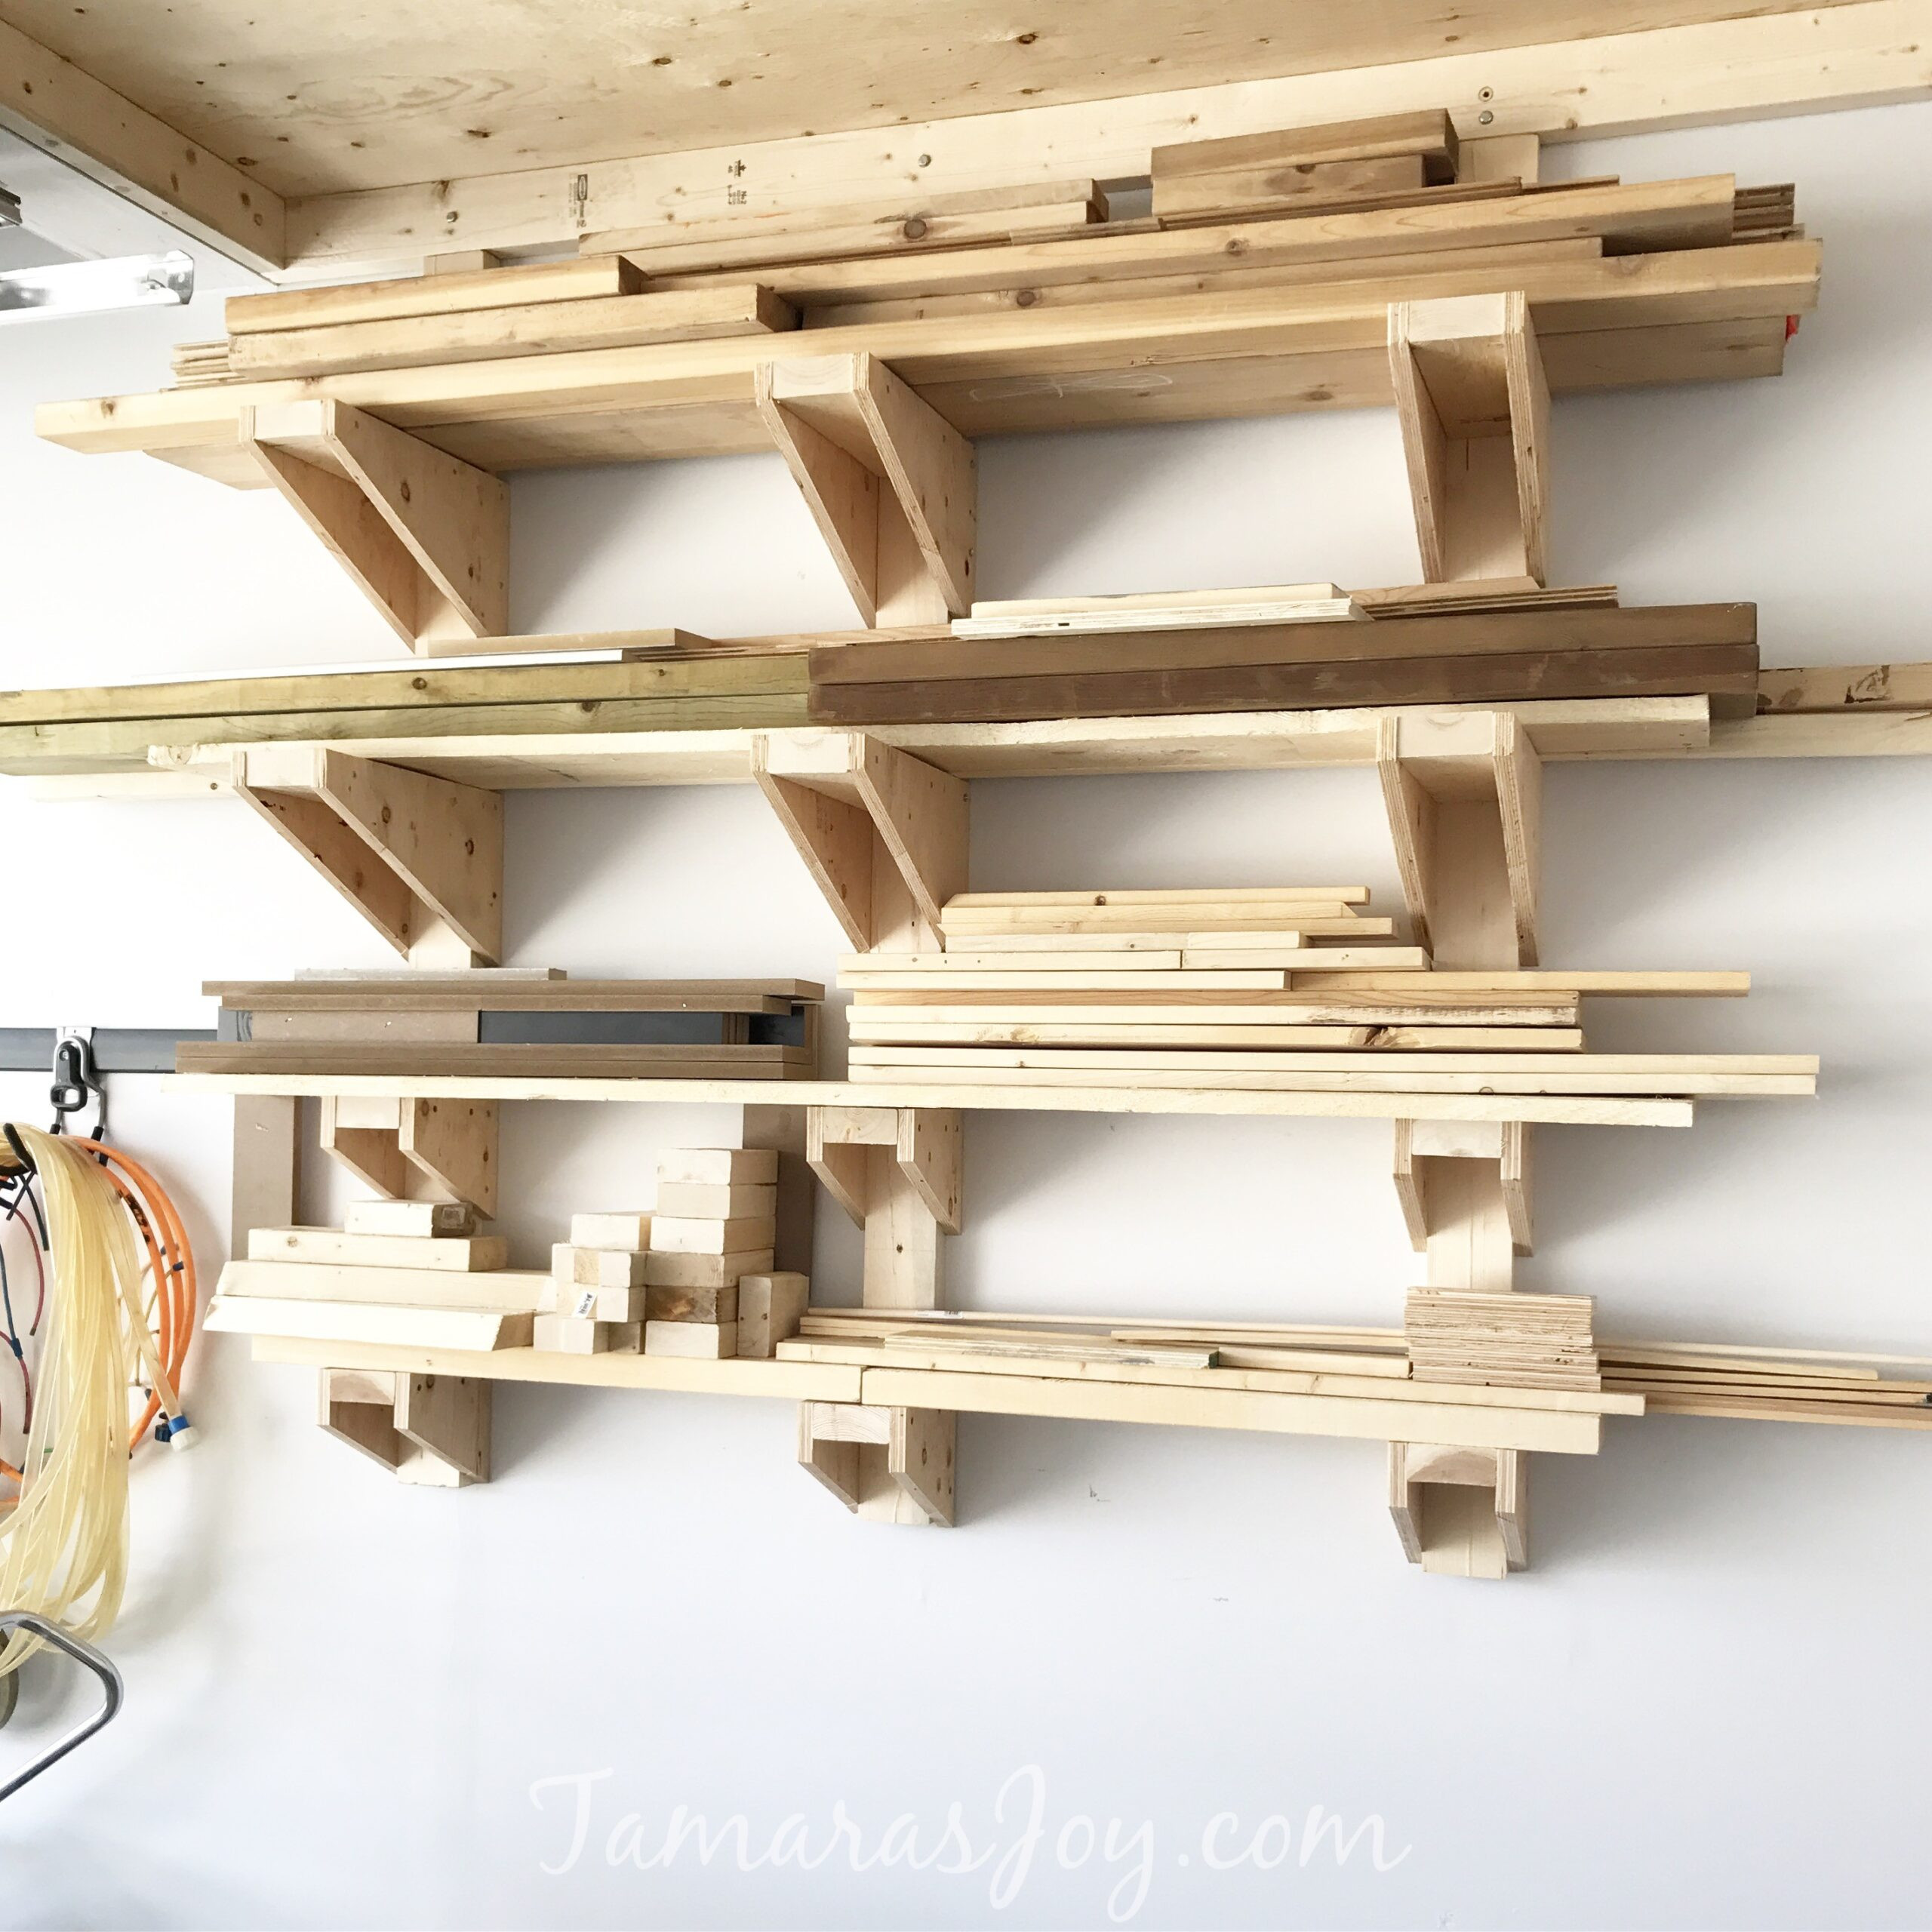 Lumber Storage Rack DIY
 A Simple DIY Garage Lumber Rack that YOU can build